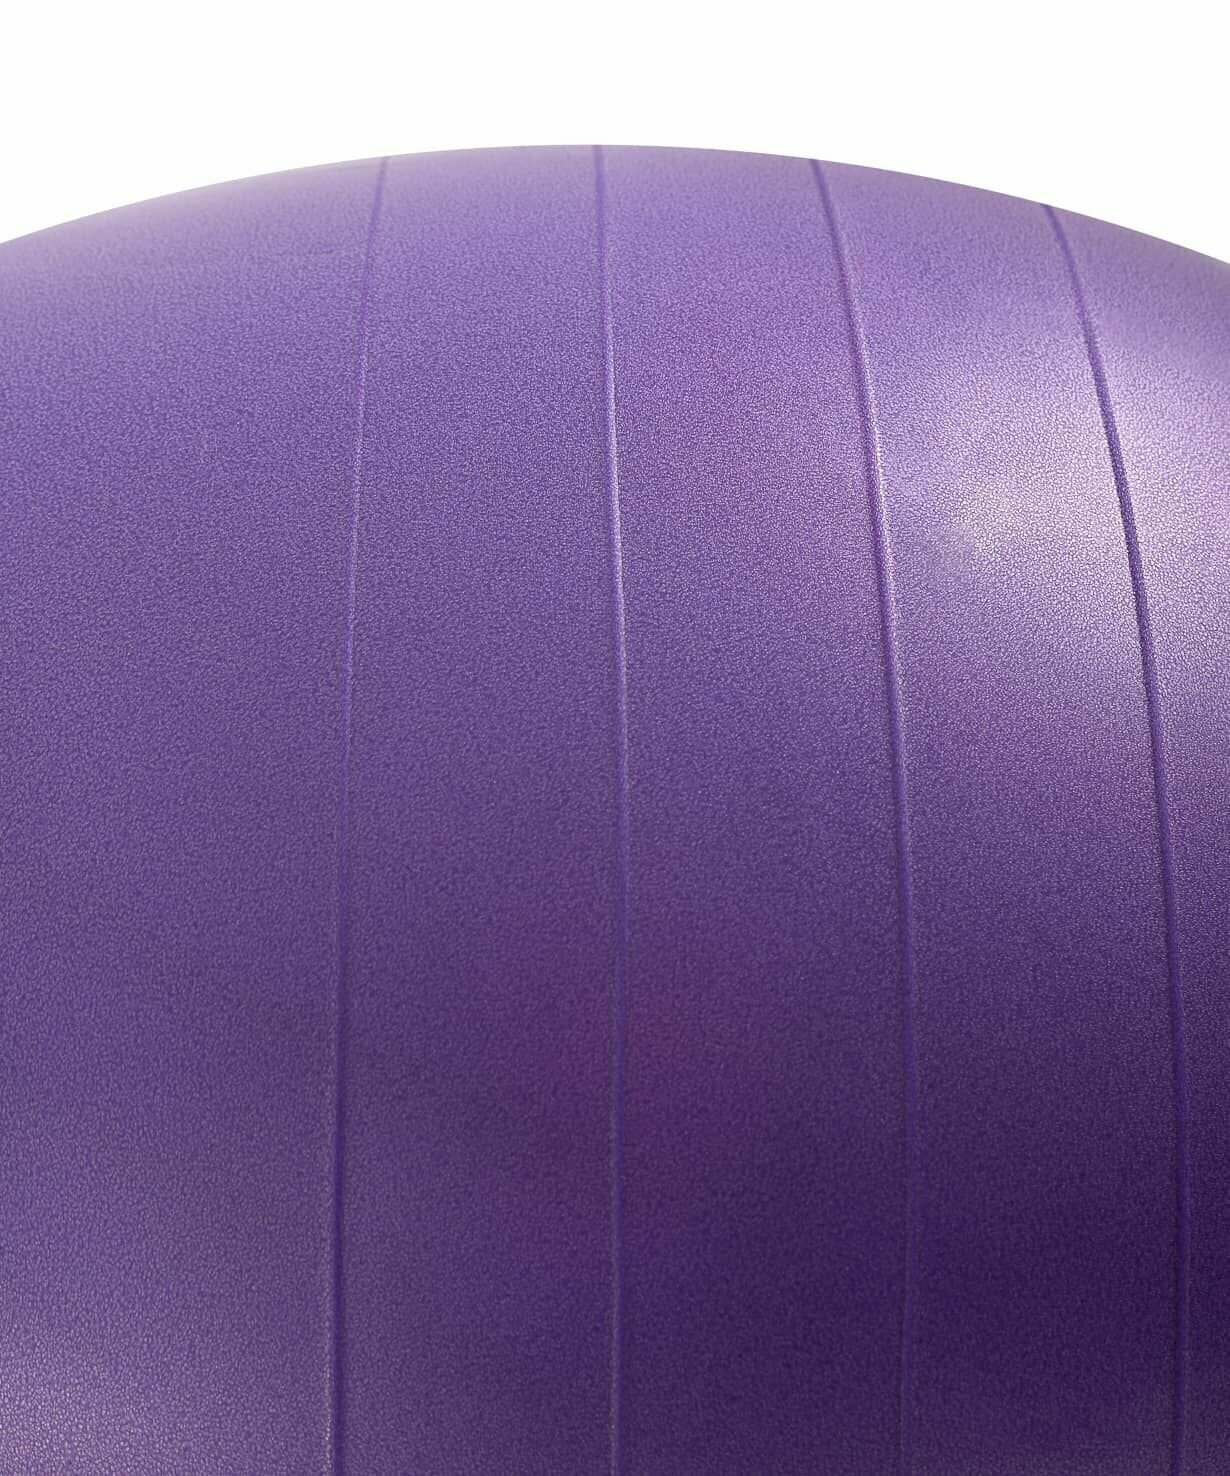 Фитбол Starfit Gb-803 арахис, 50x100 см, фиолетовый